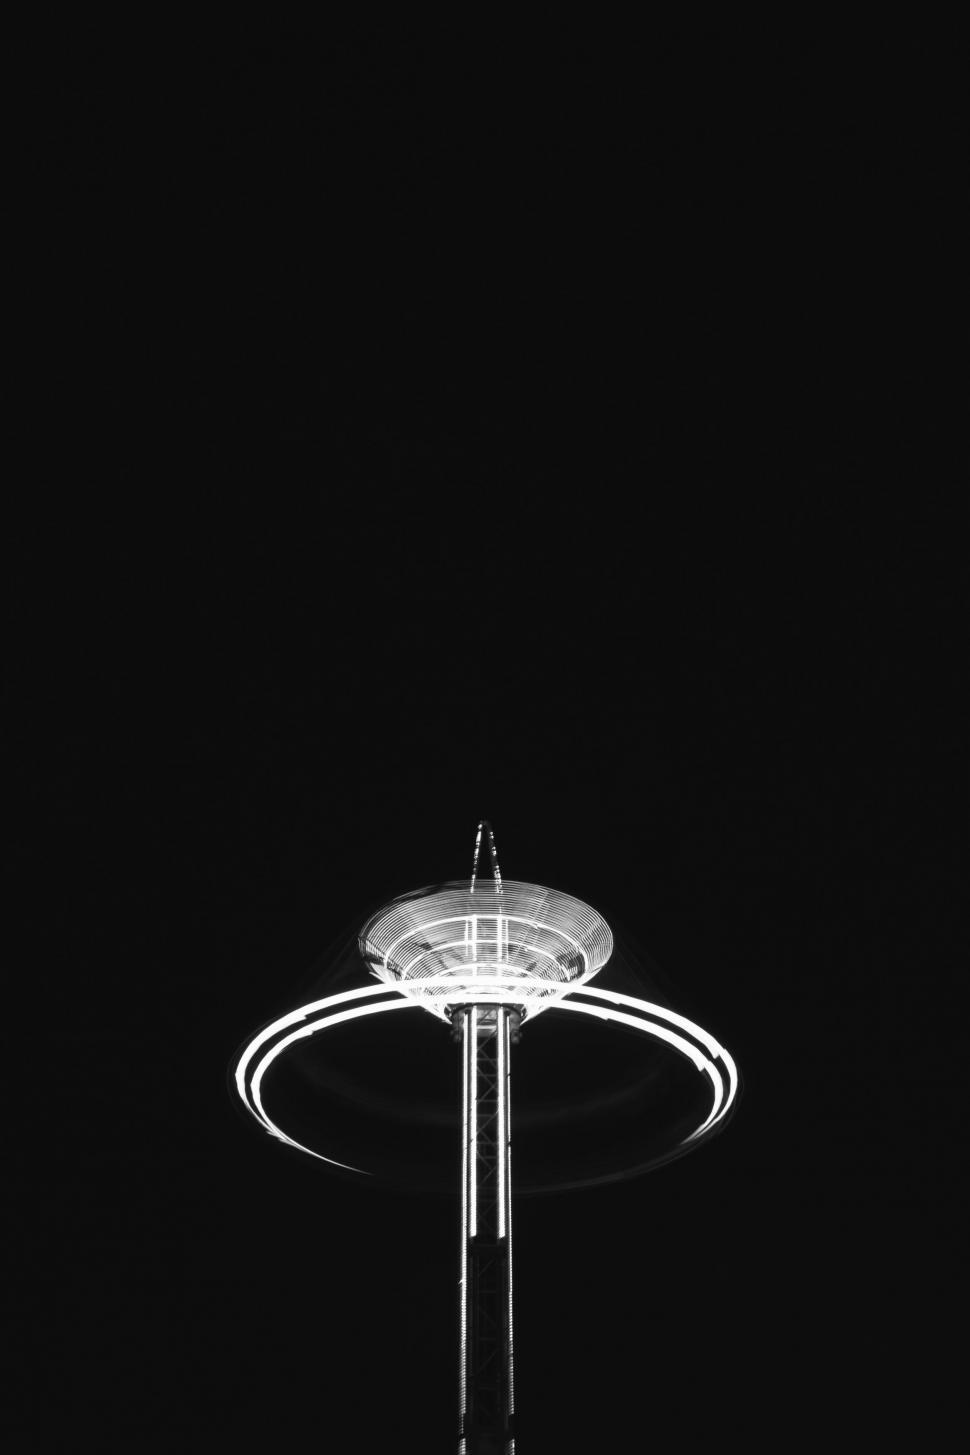 Free Image of Black and White Ferris Wheel 